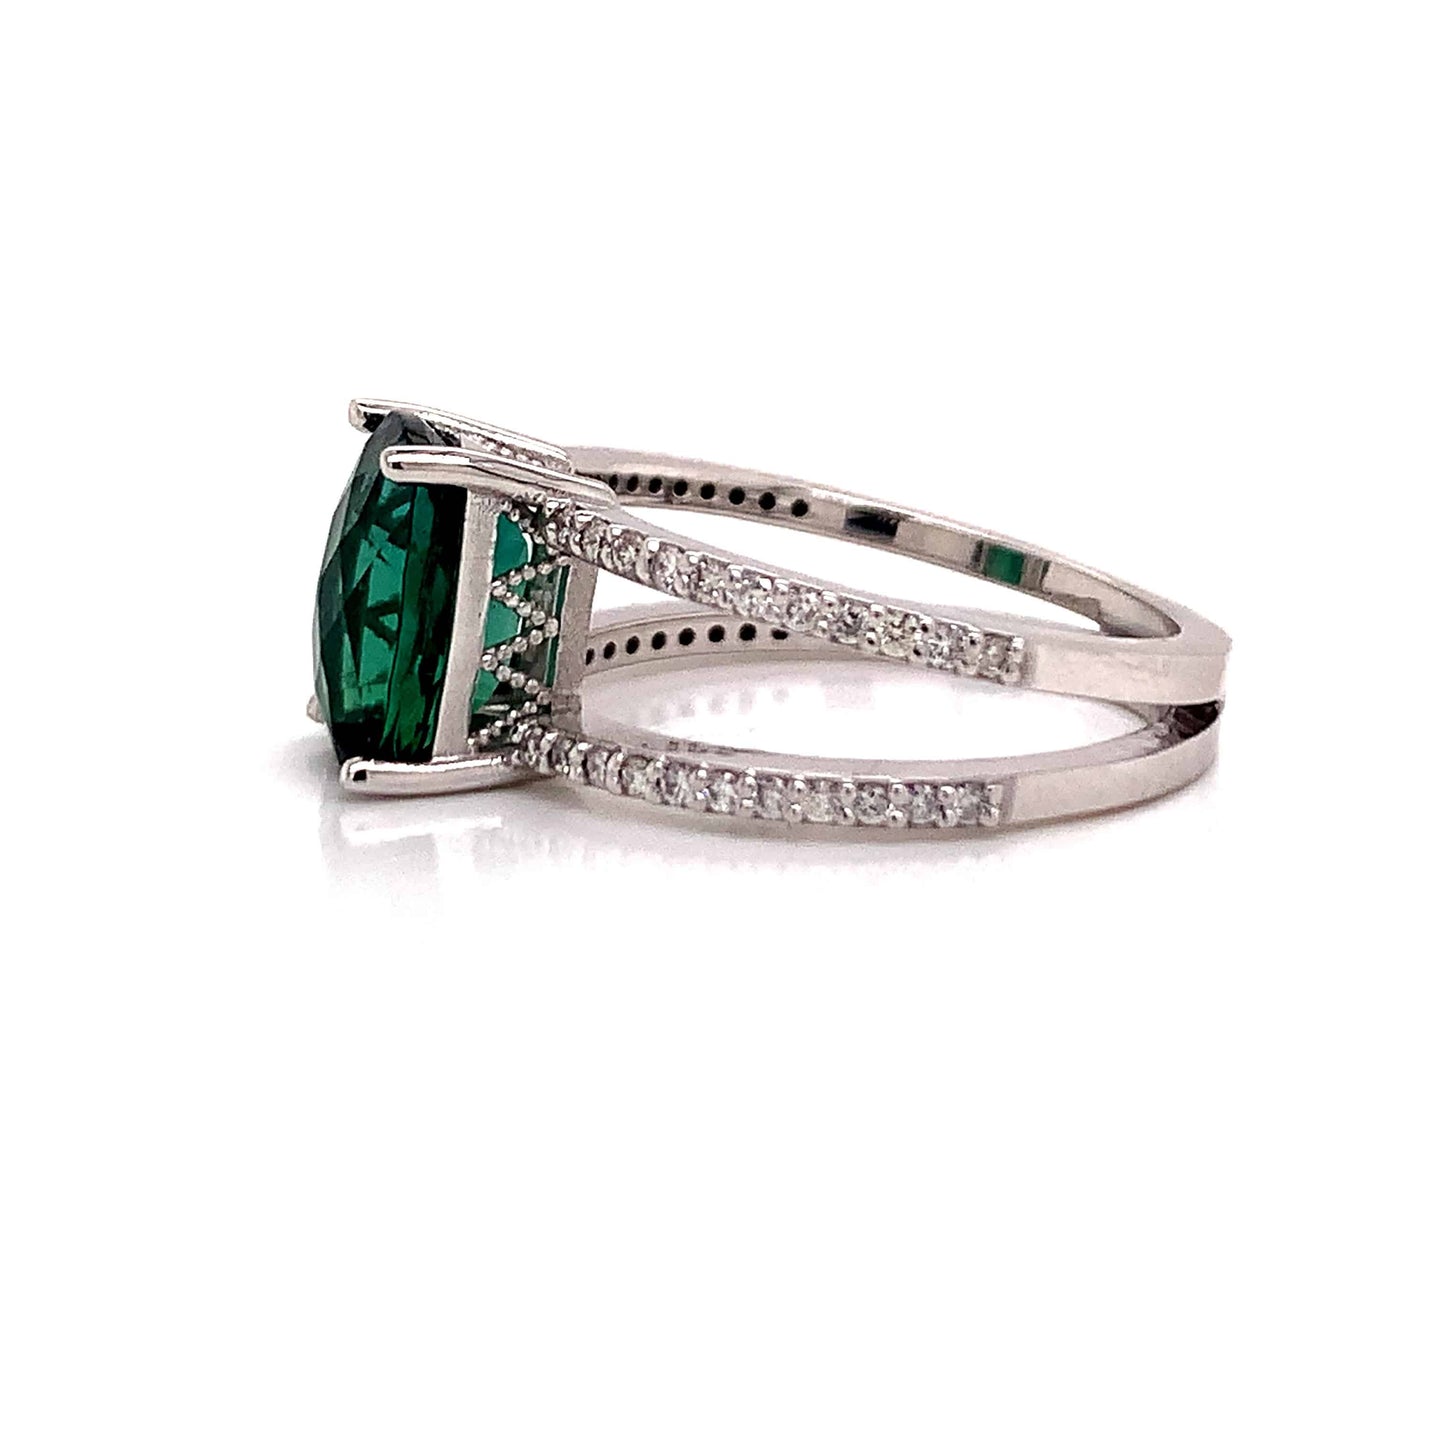 Natural Tourmaline Diamond Ring 14k WG 3.33 TCW Certified $4,950 111876 - Certified Estate Jewelry